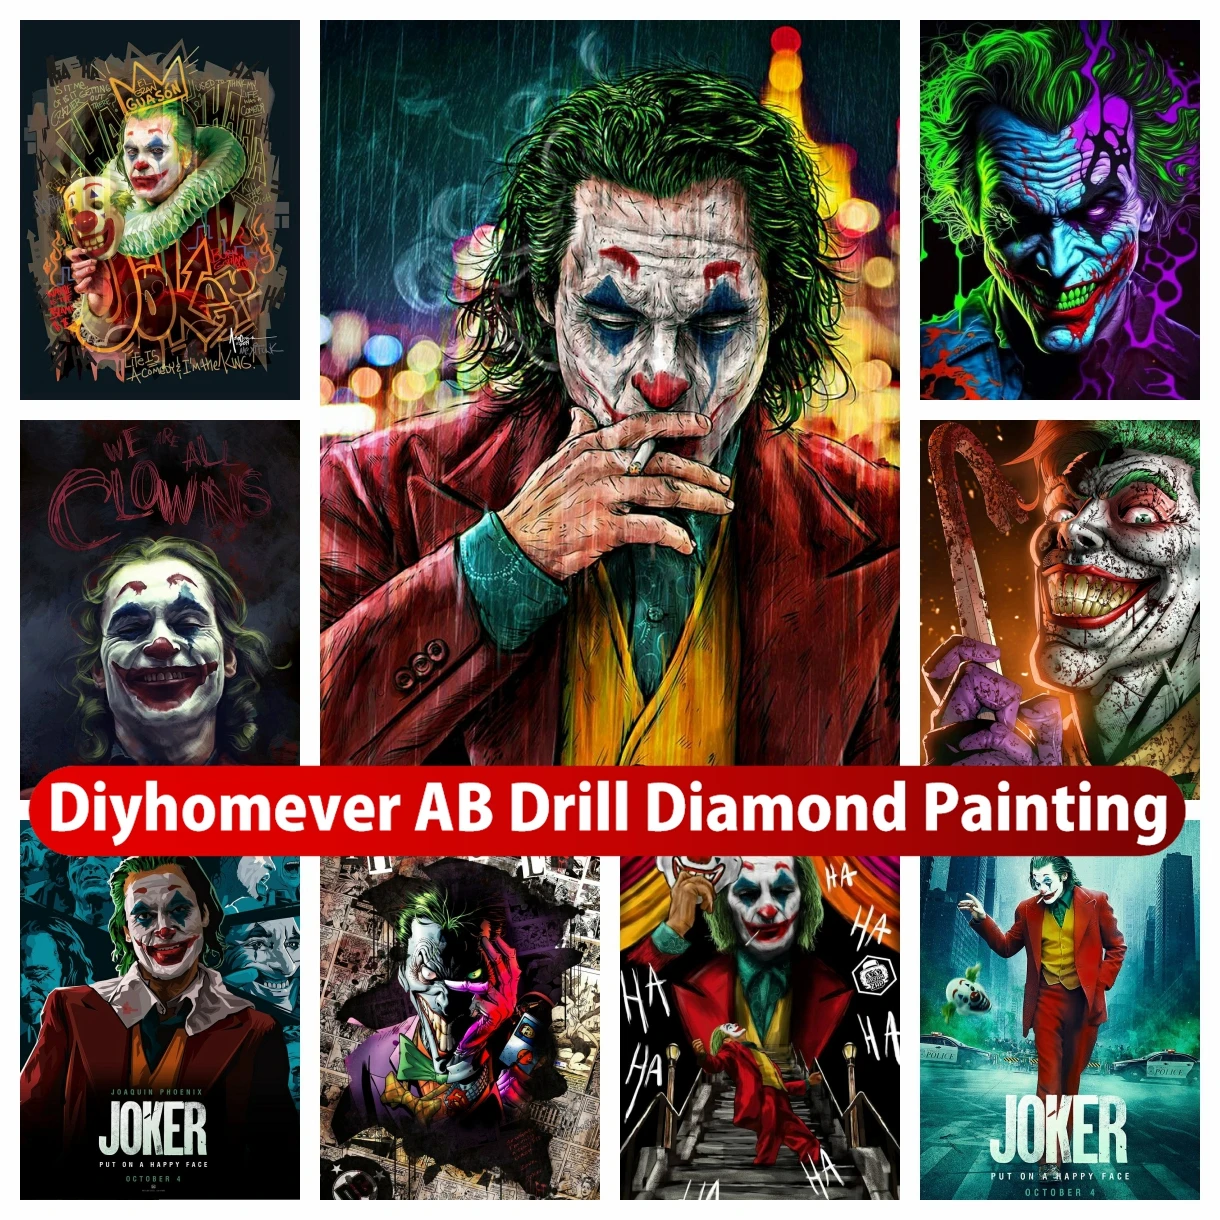 

Joker 5D DIY AB Diamond Painting Cross Stitch Mosaic The Dark Knight Picture Diamond Embroidery Rhinestone Home decor Gift